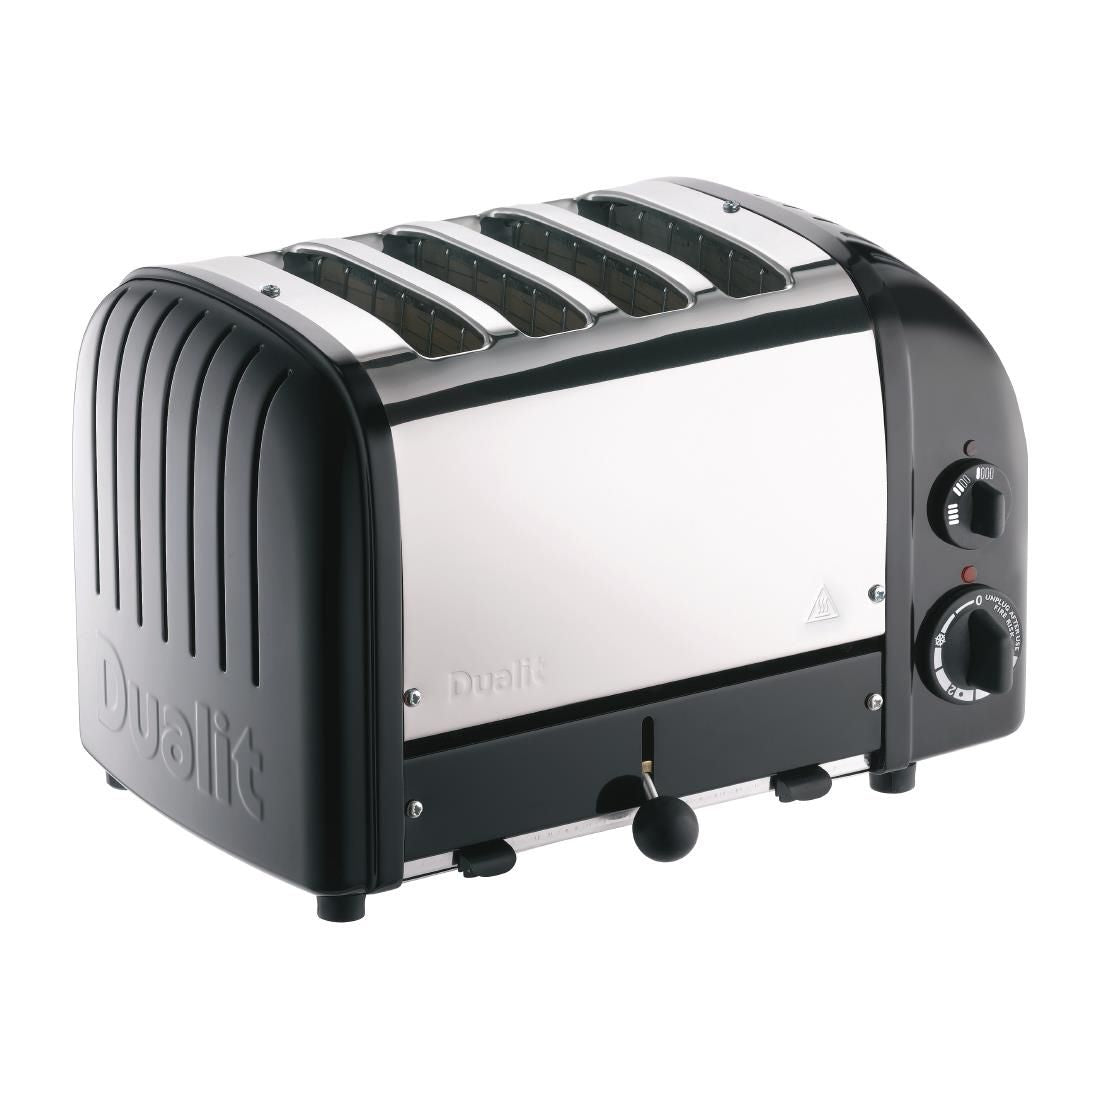 Dualit 2 x 2 Combi Vario 4 Slice Toaster Black 42166 JD Catering Equipment Solutions Ltd